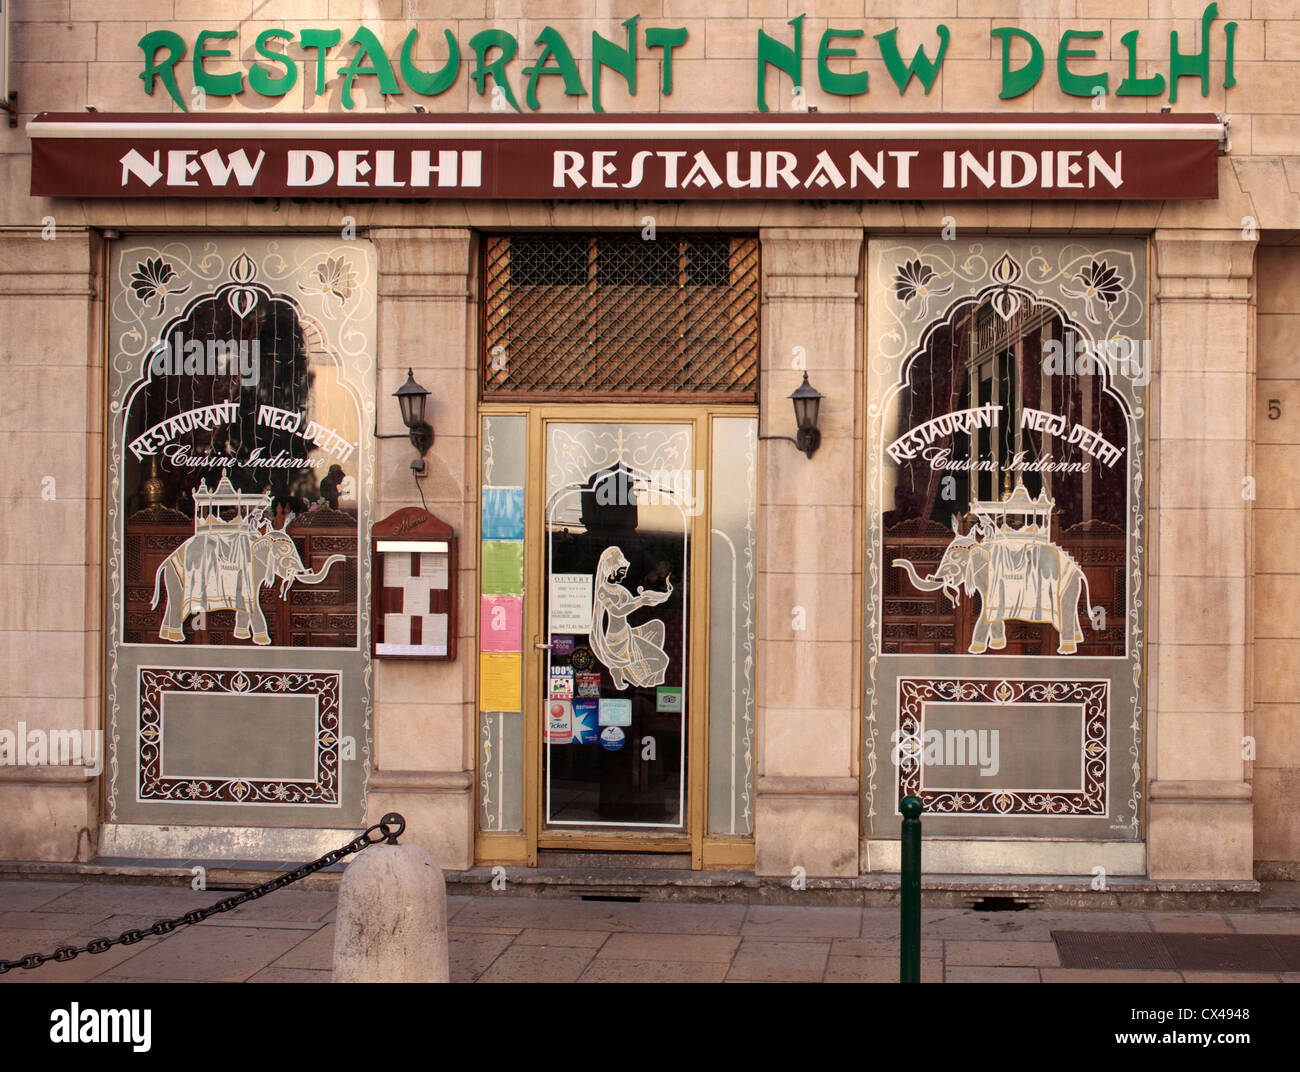 New Delhi - indian restaurant in Lyon, France Stock Photo